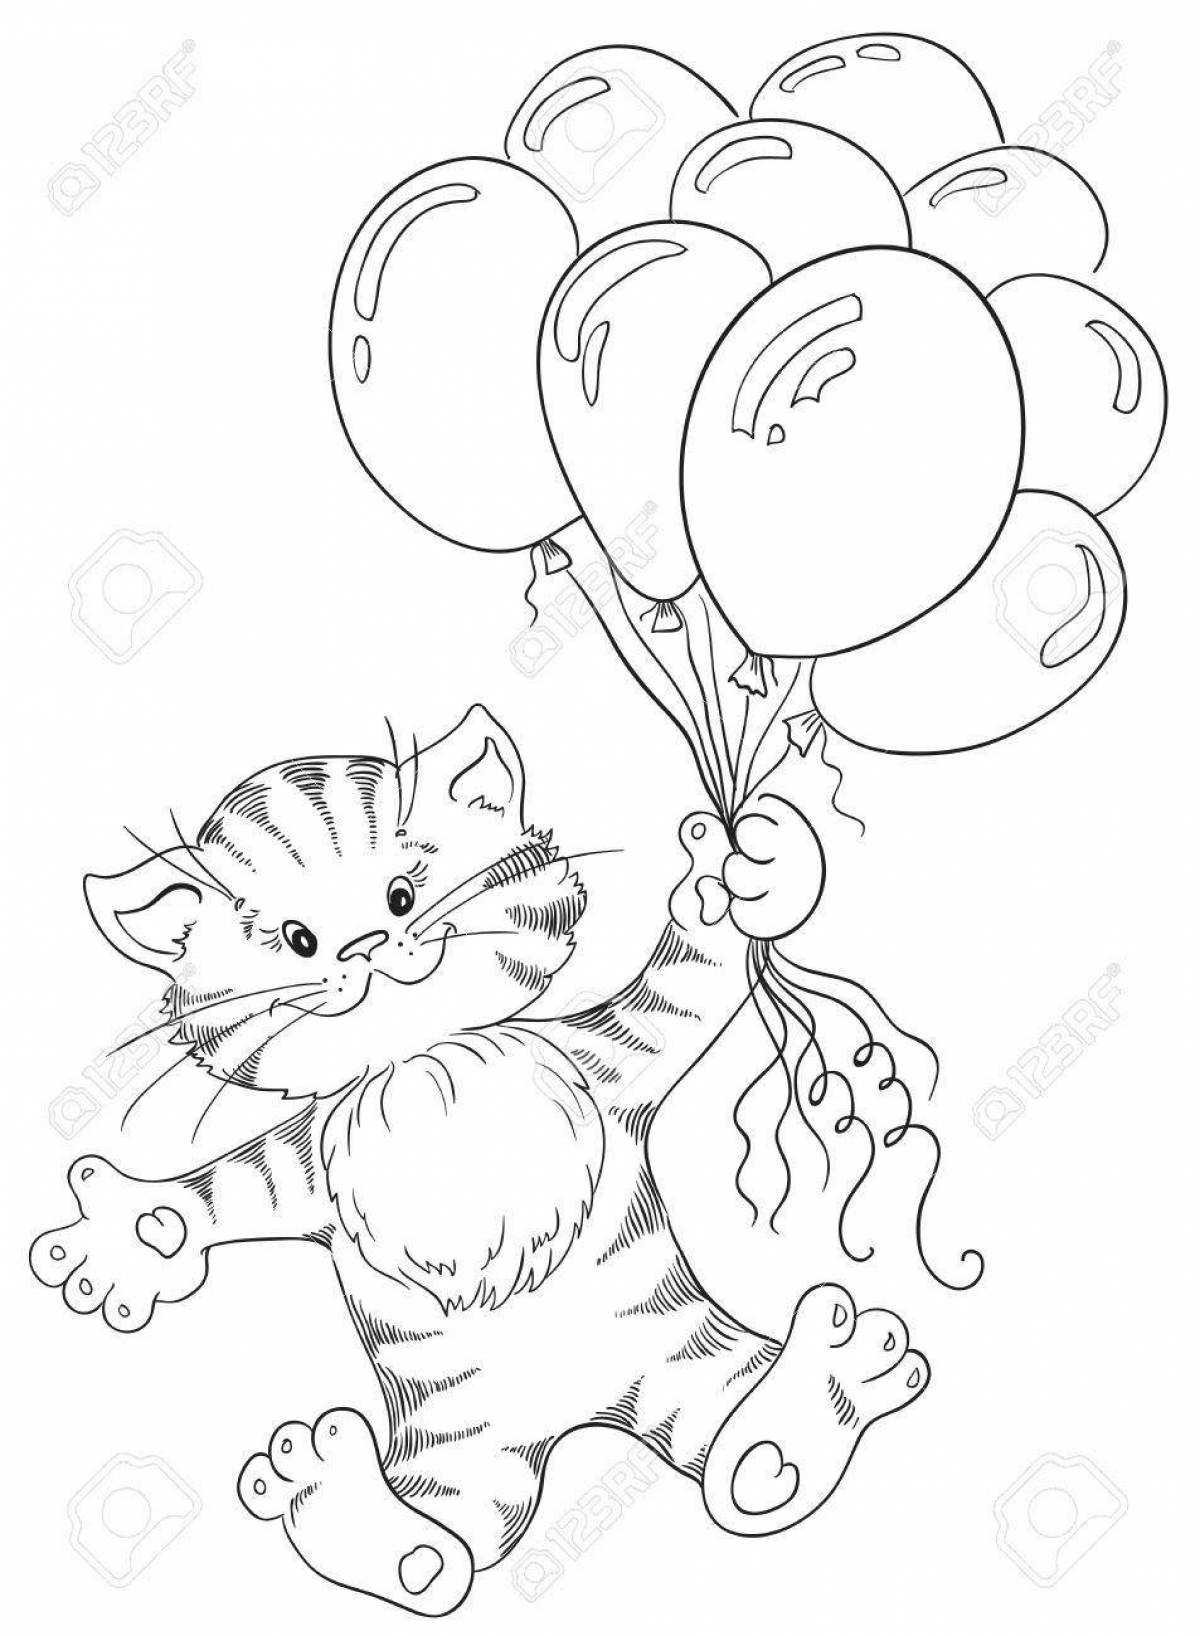 Кошка с шариками рисование средняя группа. Раскраска котик с шариками. Открытка раскраска с котиками. Котенок с шарами раскраска. Раскраска котики с днем рождения.